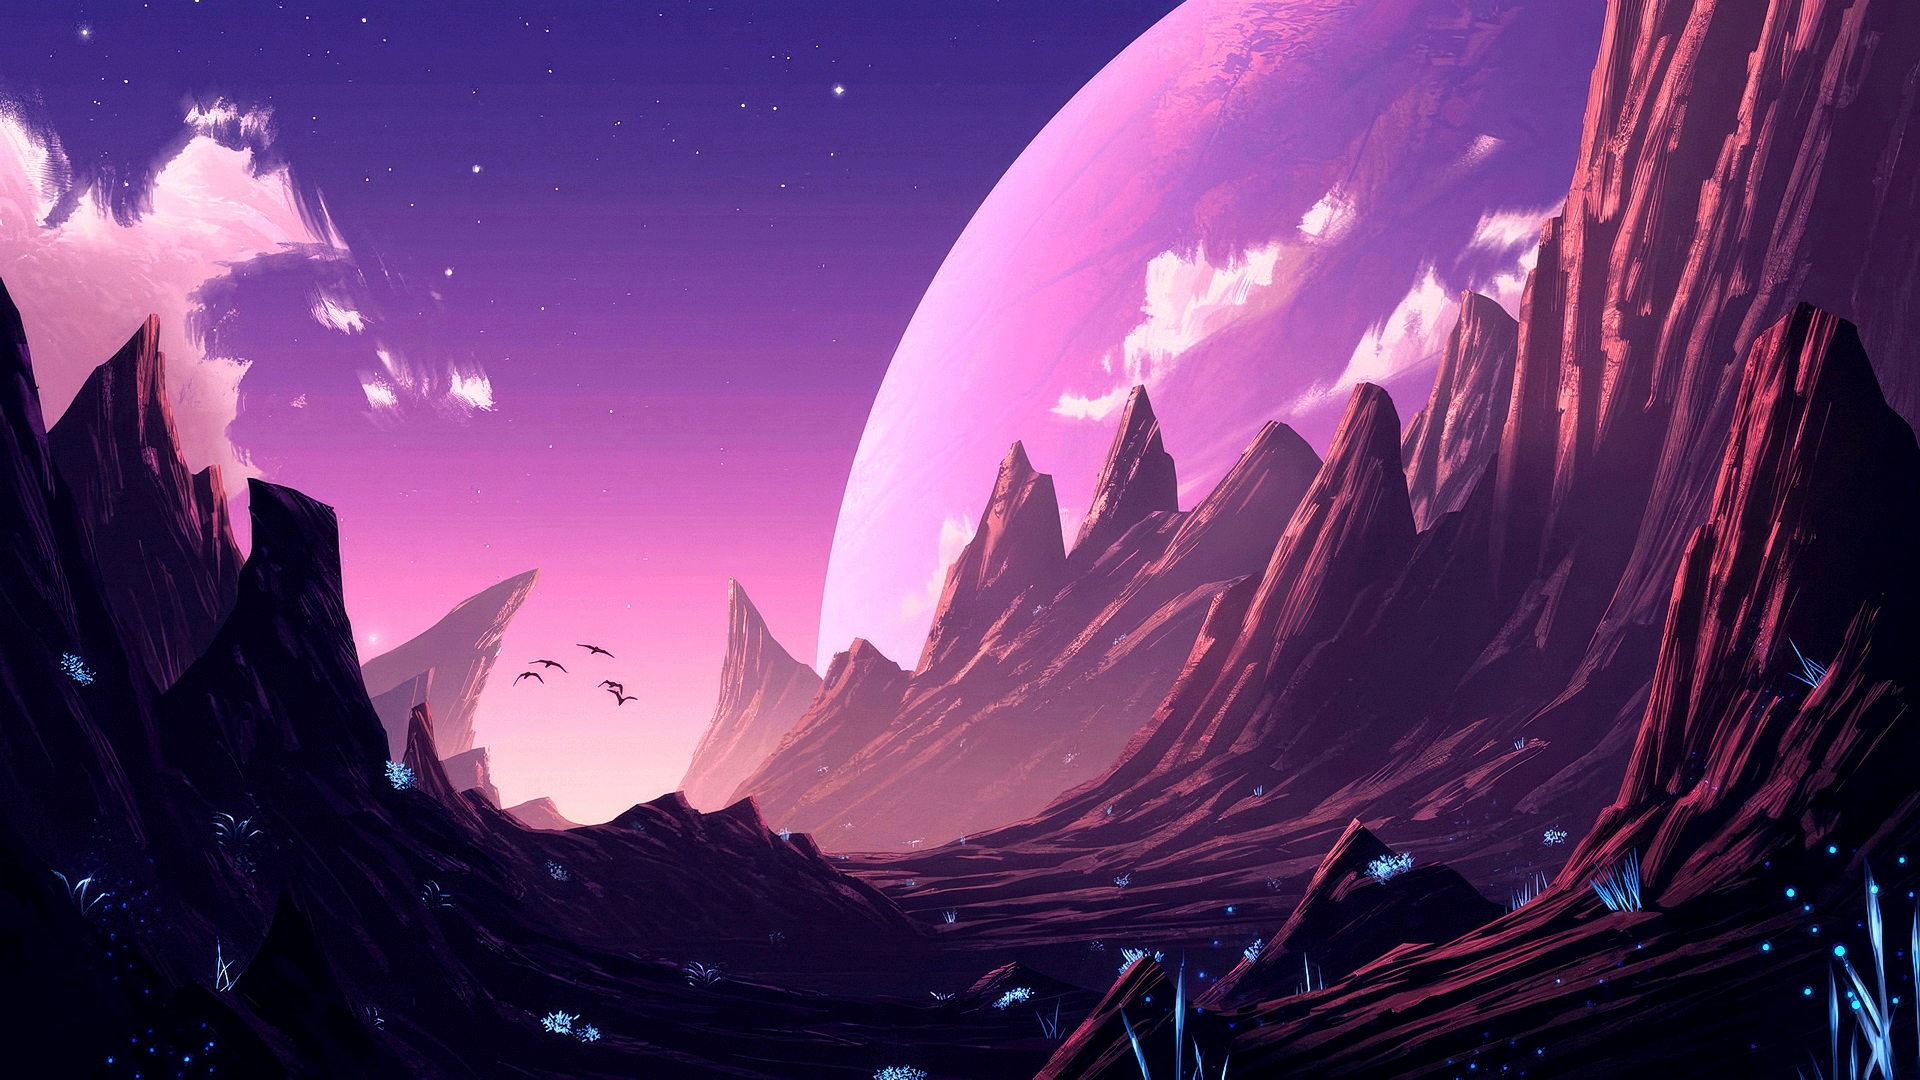 Alien fantasy landscape